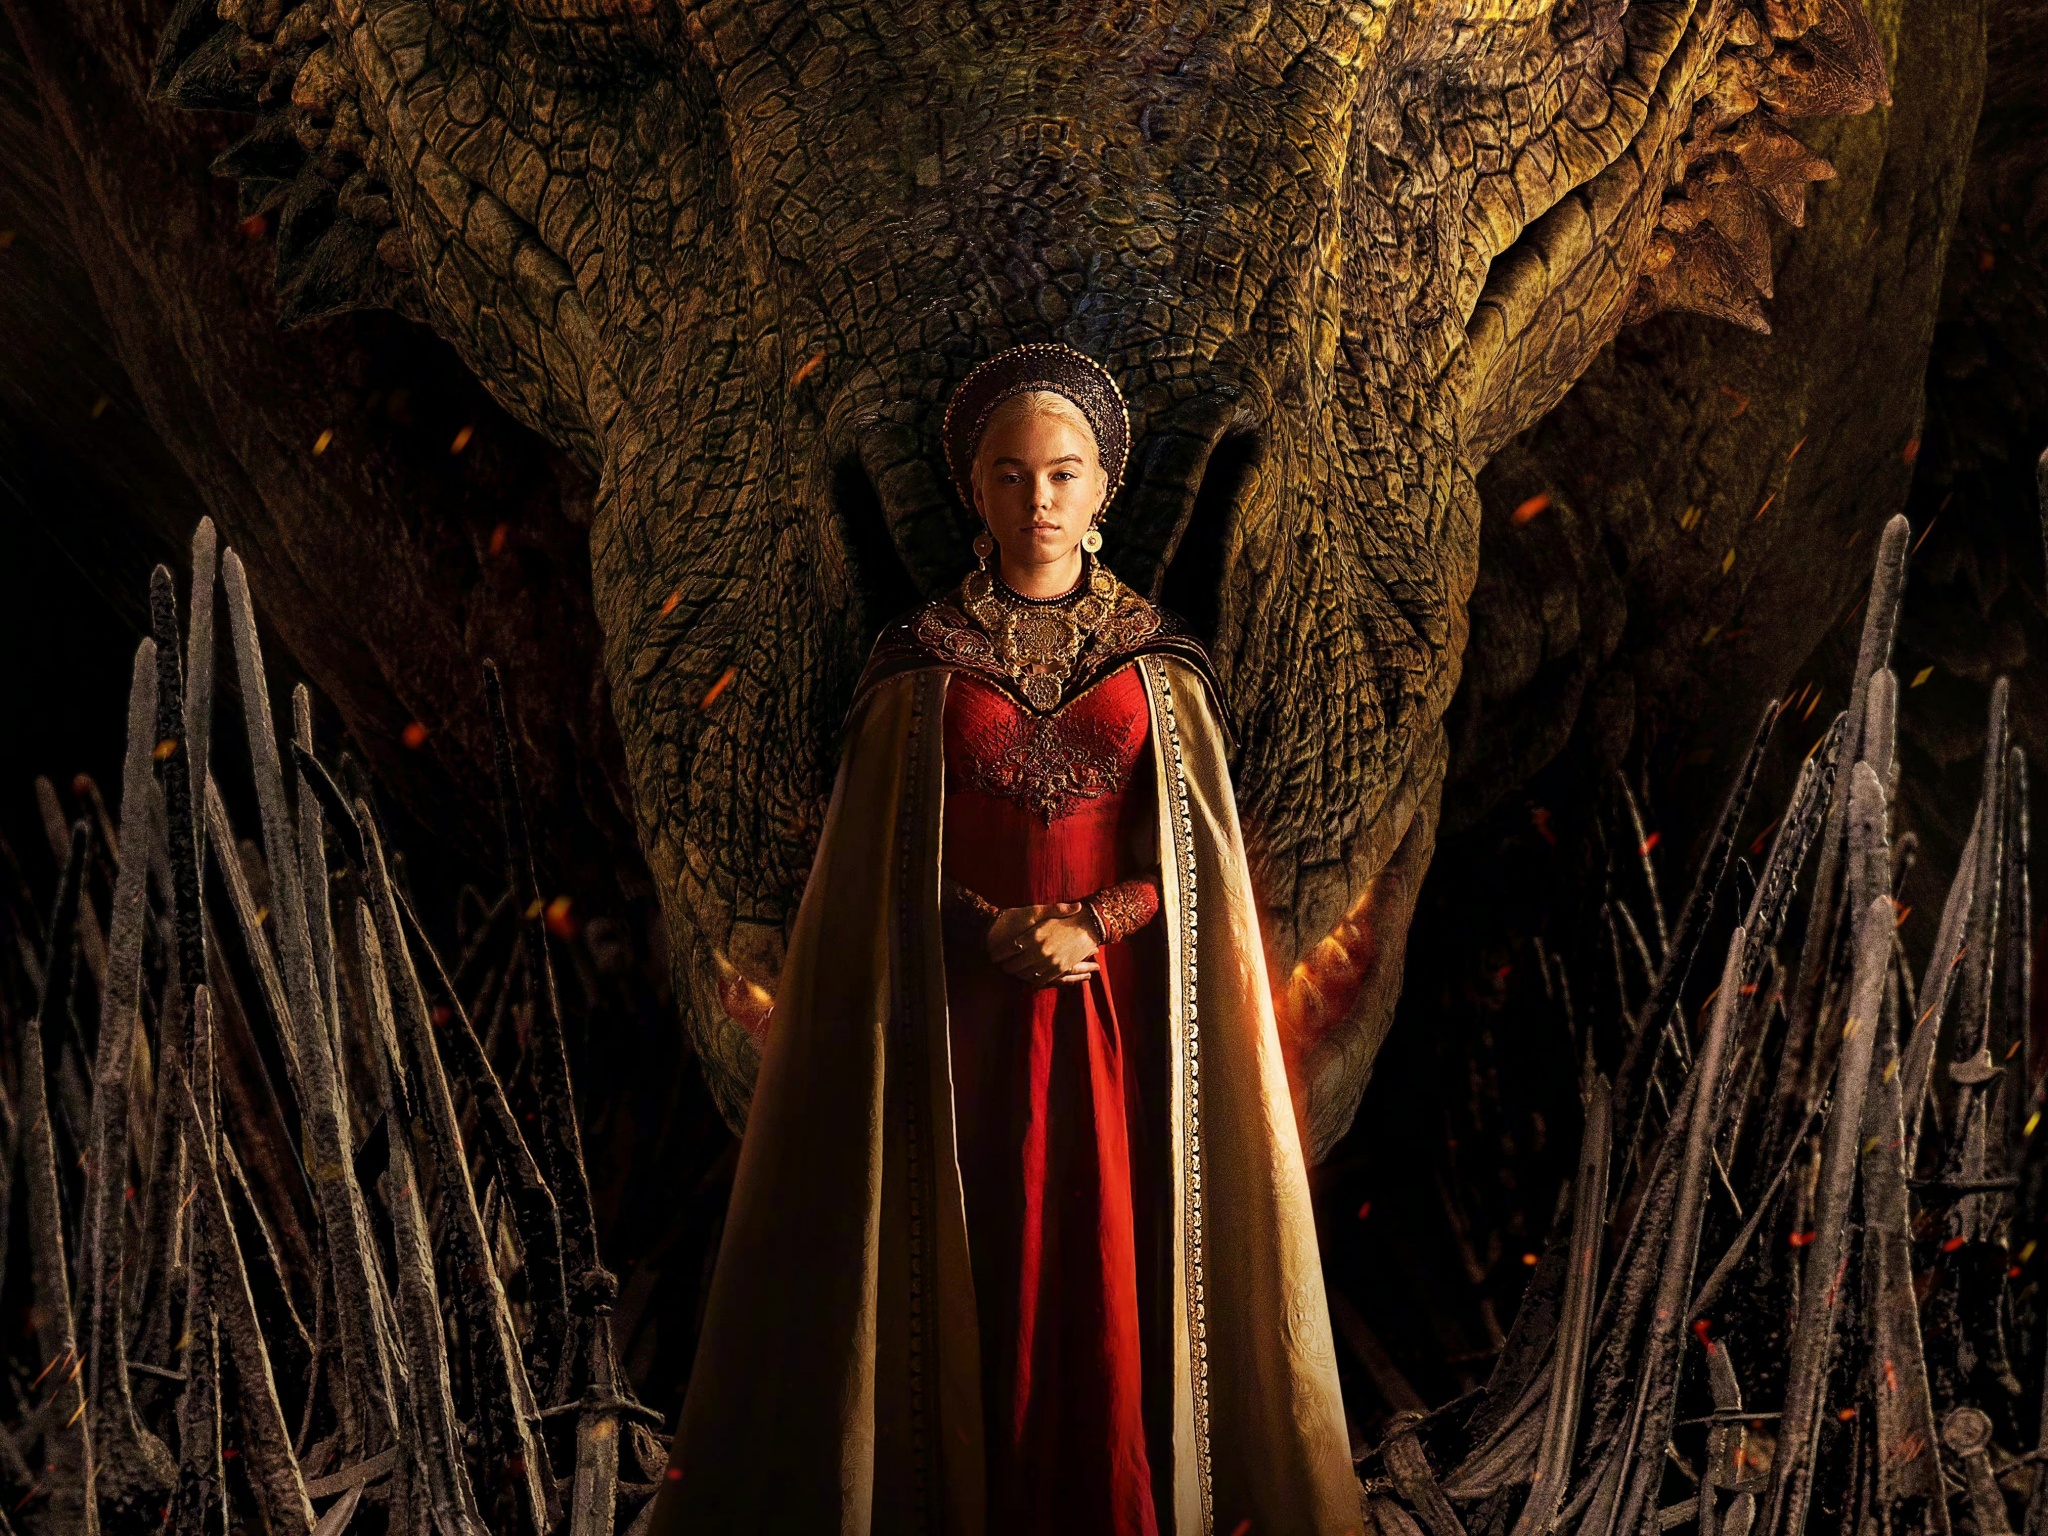 Milly Alcock Wallpaper 4K, Princess Rhaenyra Targaryen, House of the Dragon, Movies